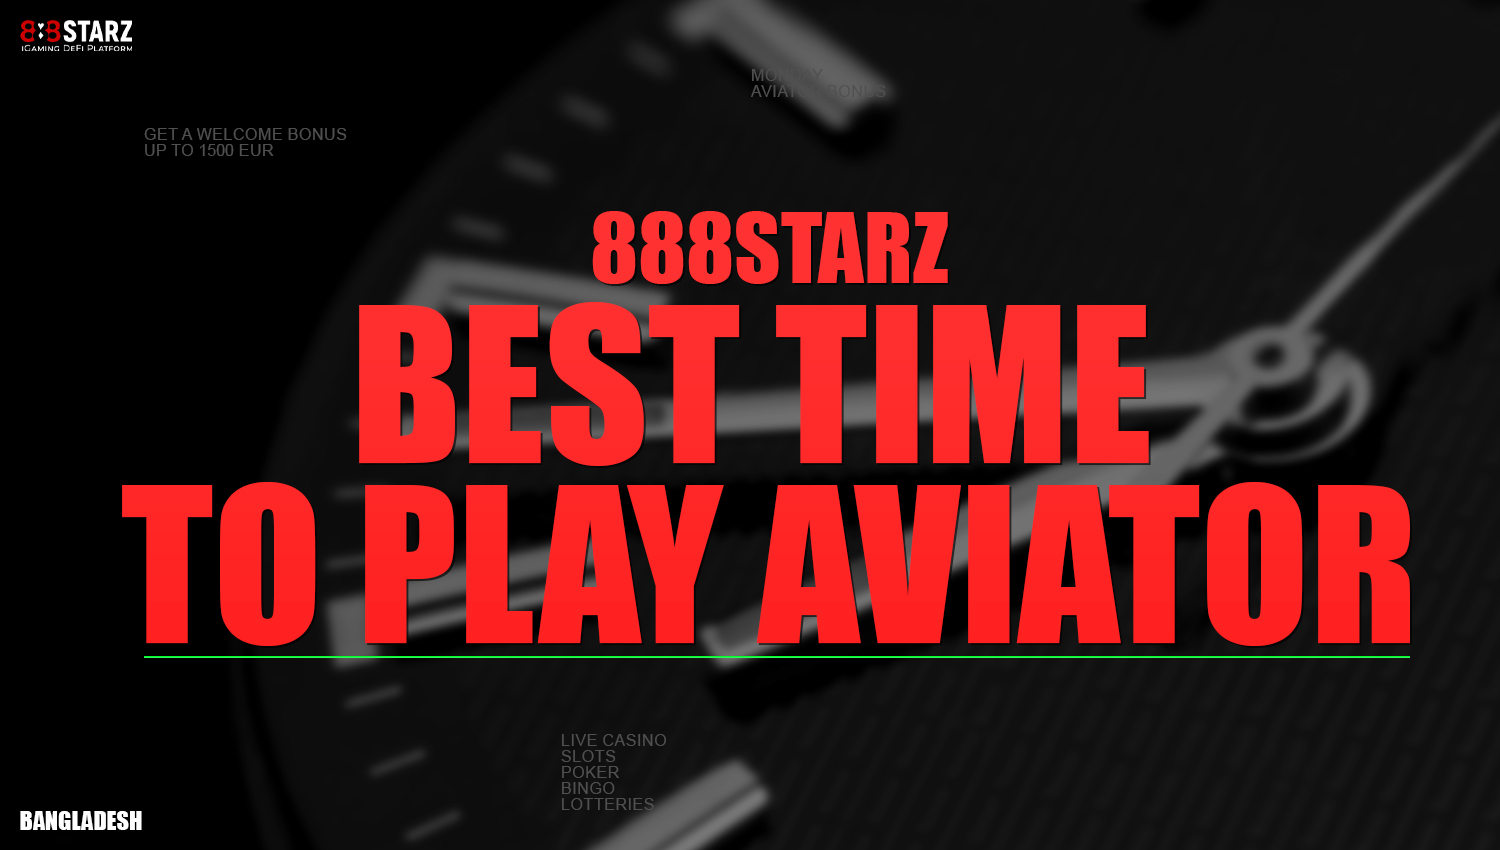 Best time to win Aviator on 888starz platform